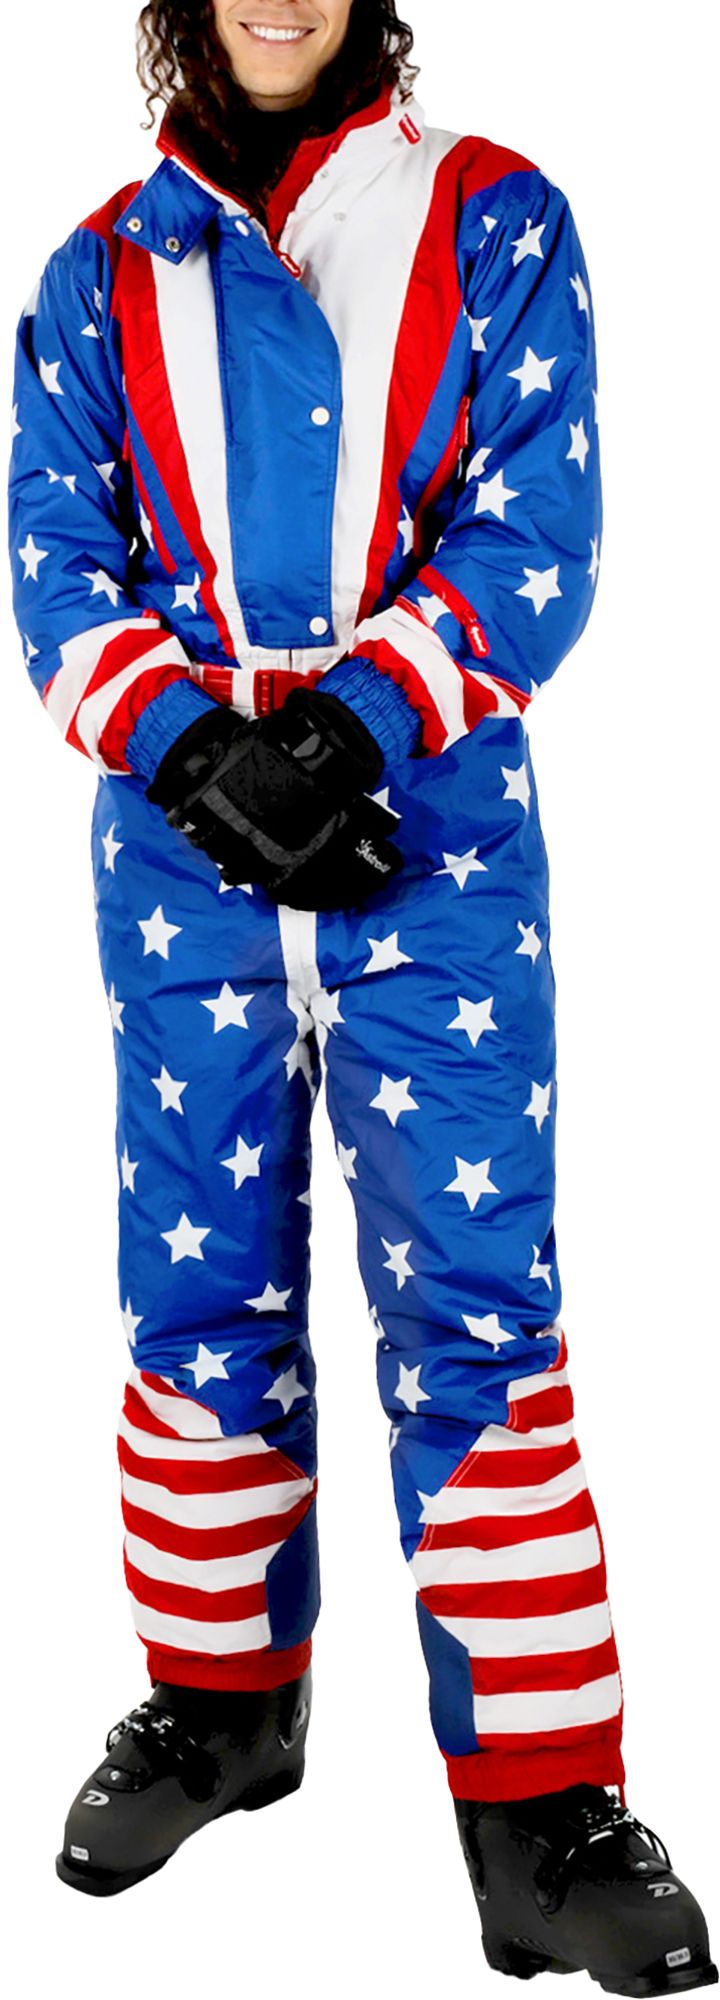 Photos - Ski Wear Tipsy Elves Men's Americana Snow Suit, Medium, Blue 22DBPMMMRCNSKSTXXMOU